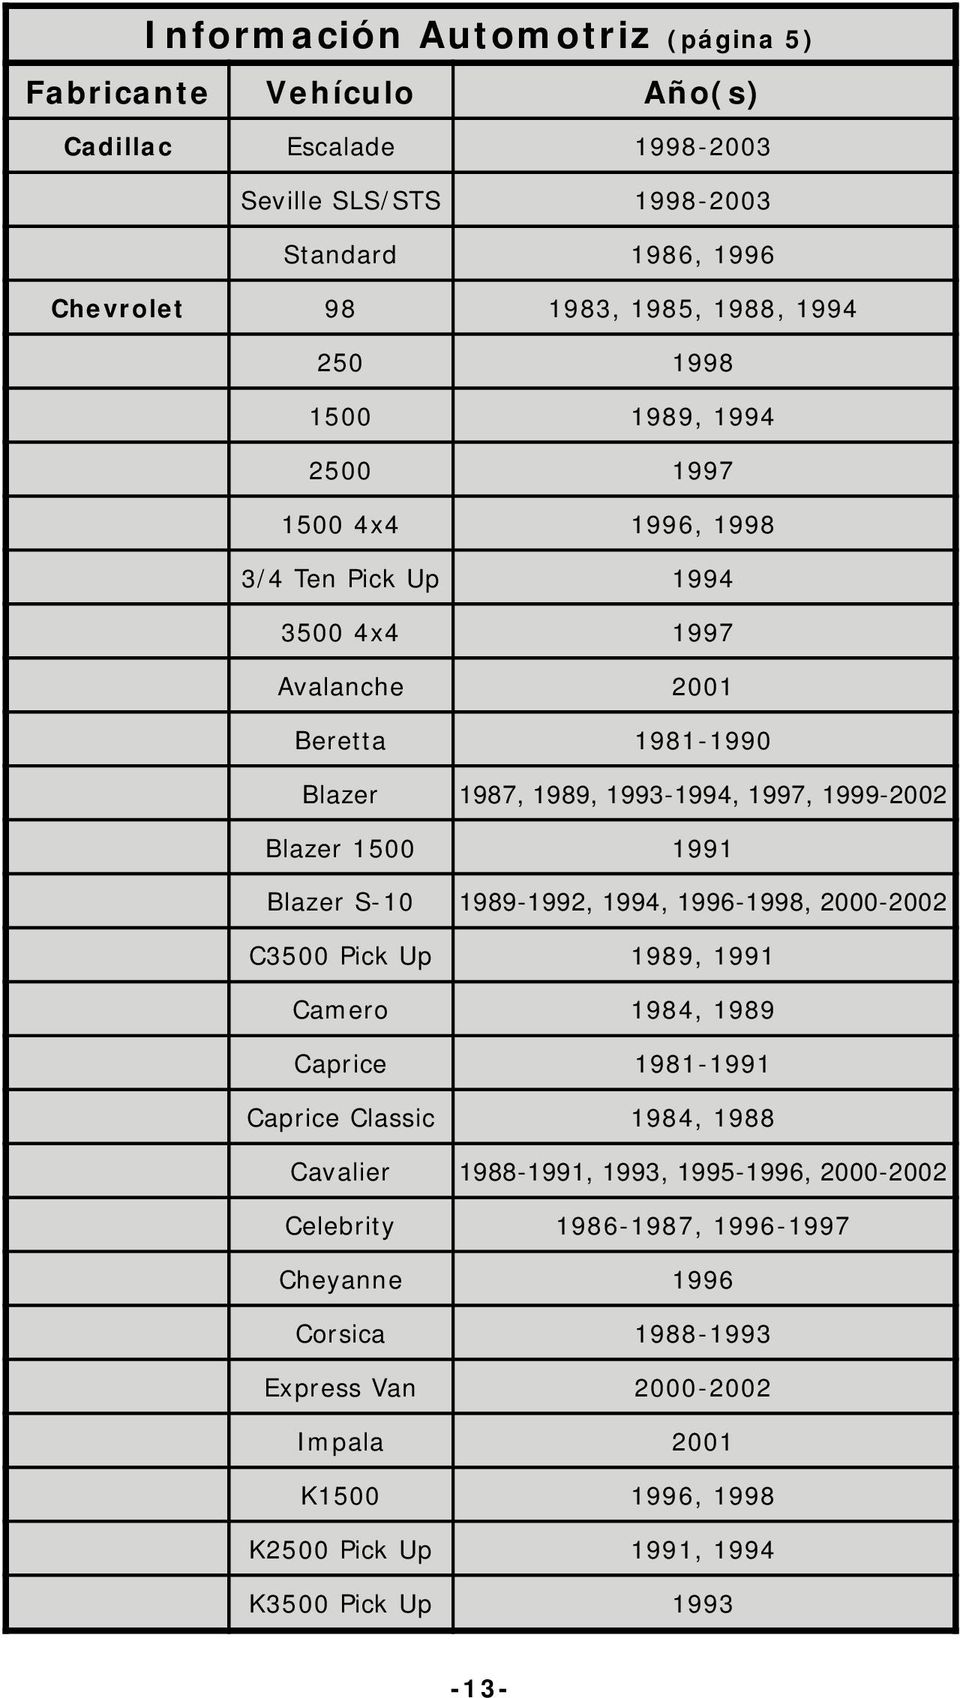 1500 1991 Blazer S-10 1989-1992, 1994, 1996-1998, 2000-2002 C3500 Pick Up 1989, 1991 Camero 1984, 1989 Caprice 1981-1991 Caprice Classic 1984, 1988 Cavalier 1988-1991, 1993,